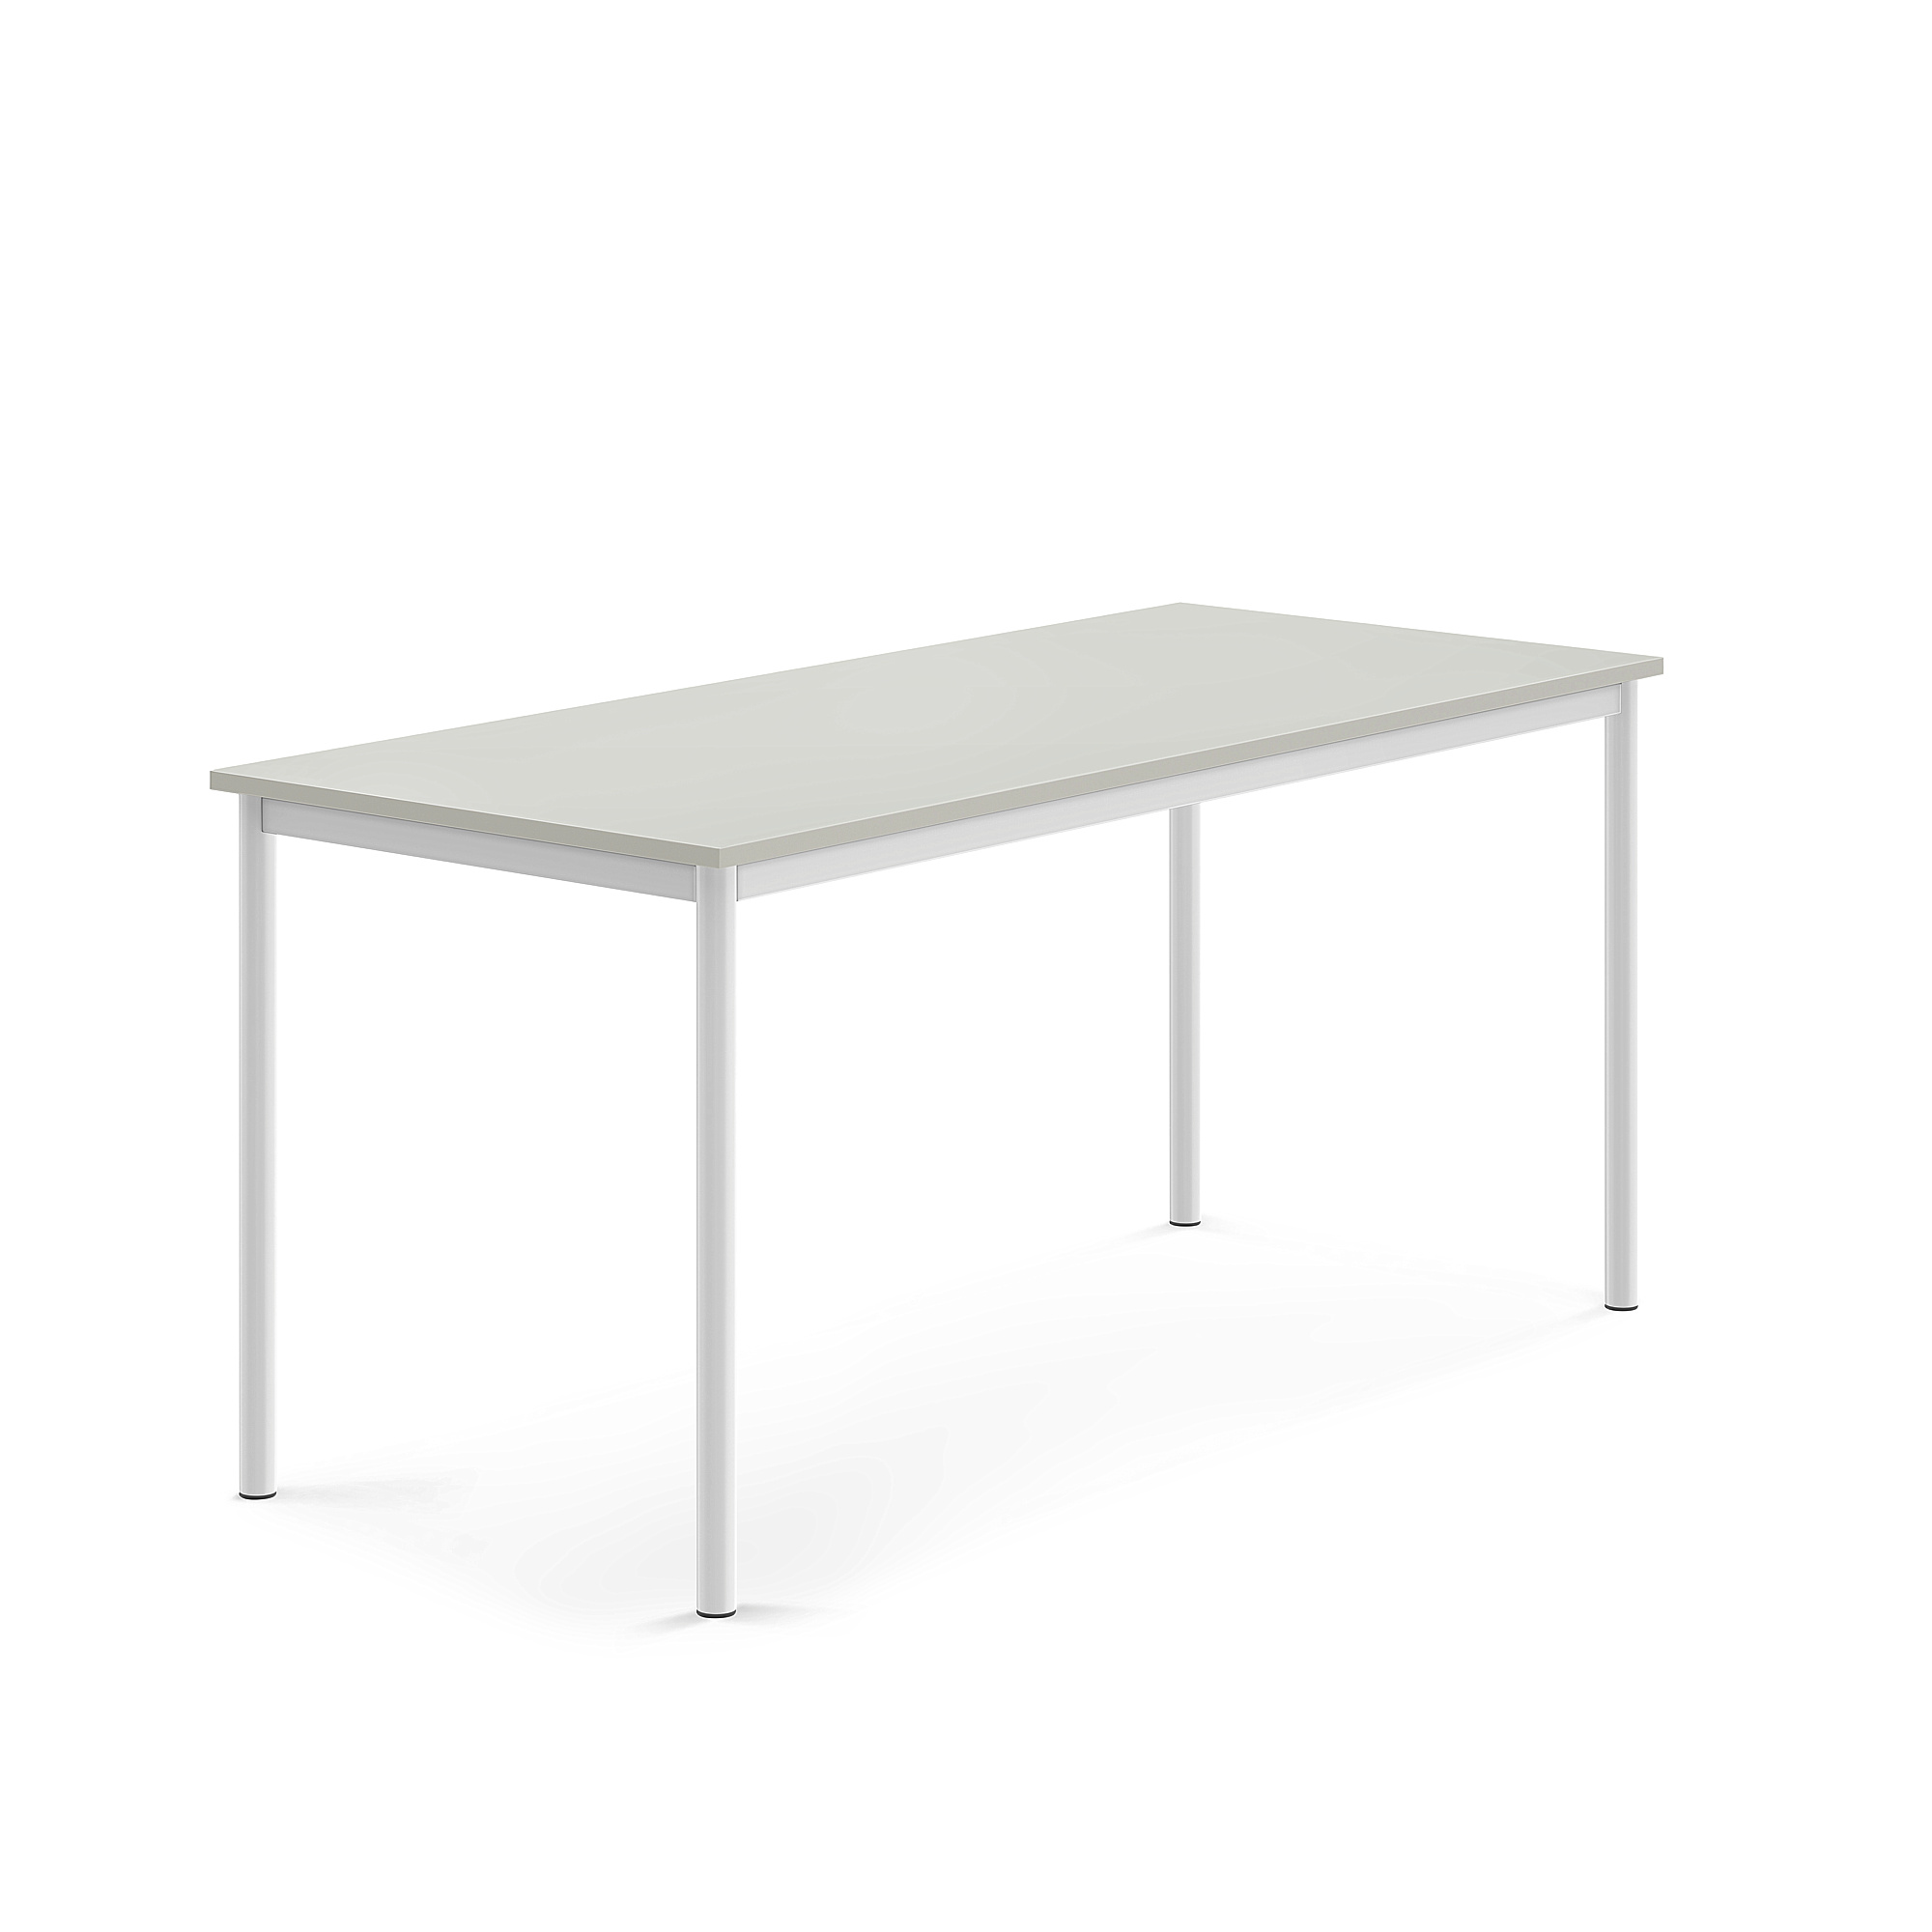 Stůl BORÅS, 1600x700x720 mm, bílé nohy, HPL deska, šedá